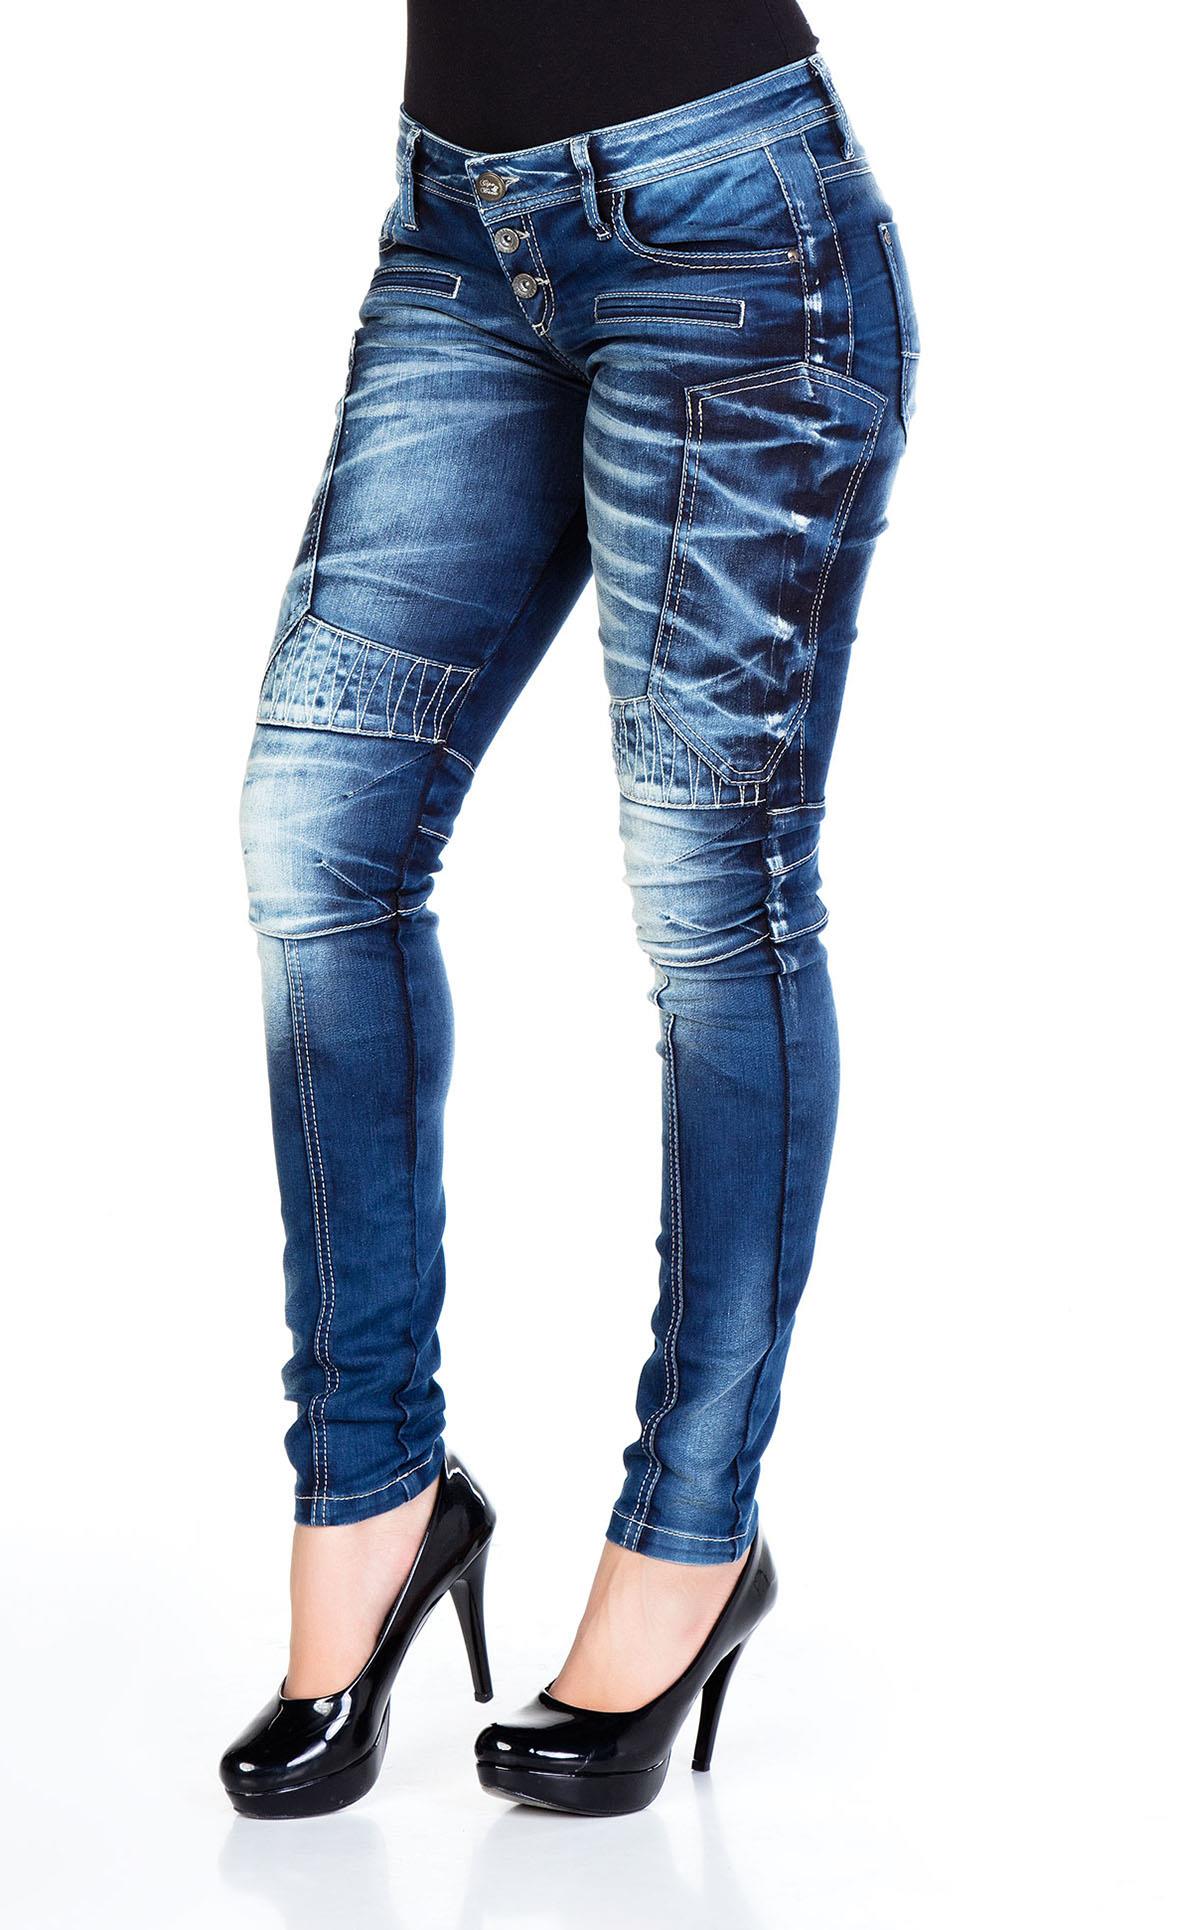 WD255 women's comfortable jeans in a biker style in Slim Fit